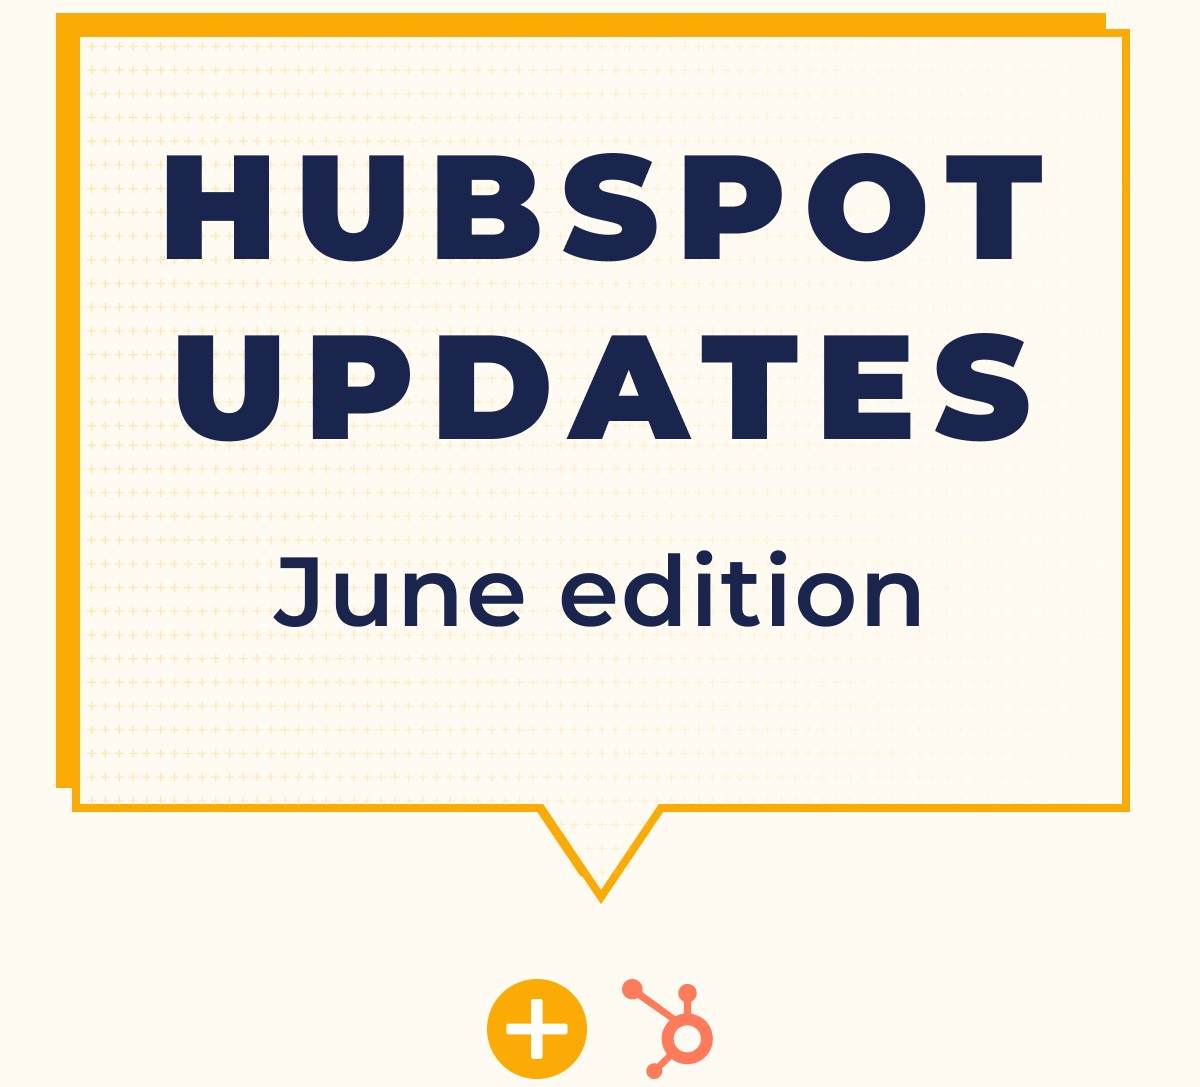 HUBSPOT UPDATES June editionGHHG